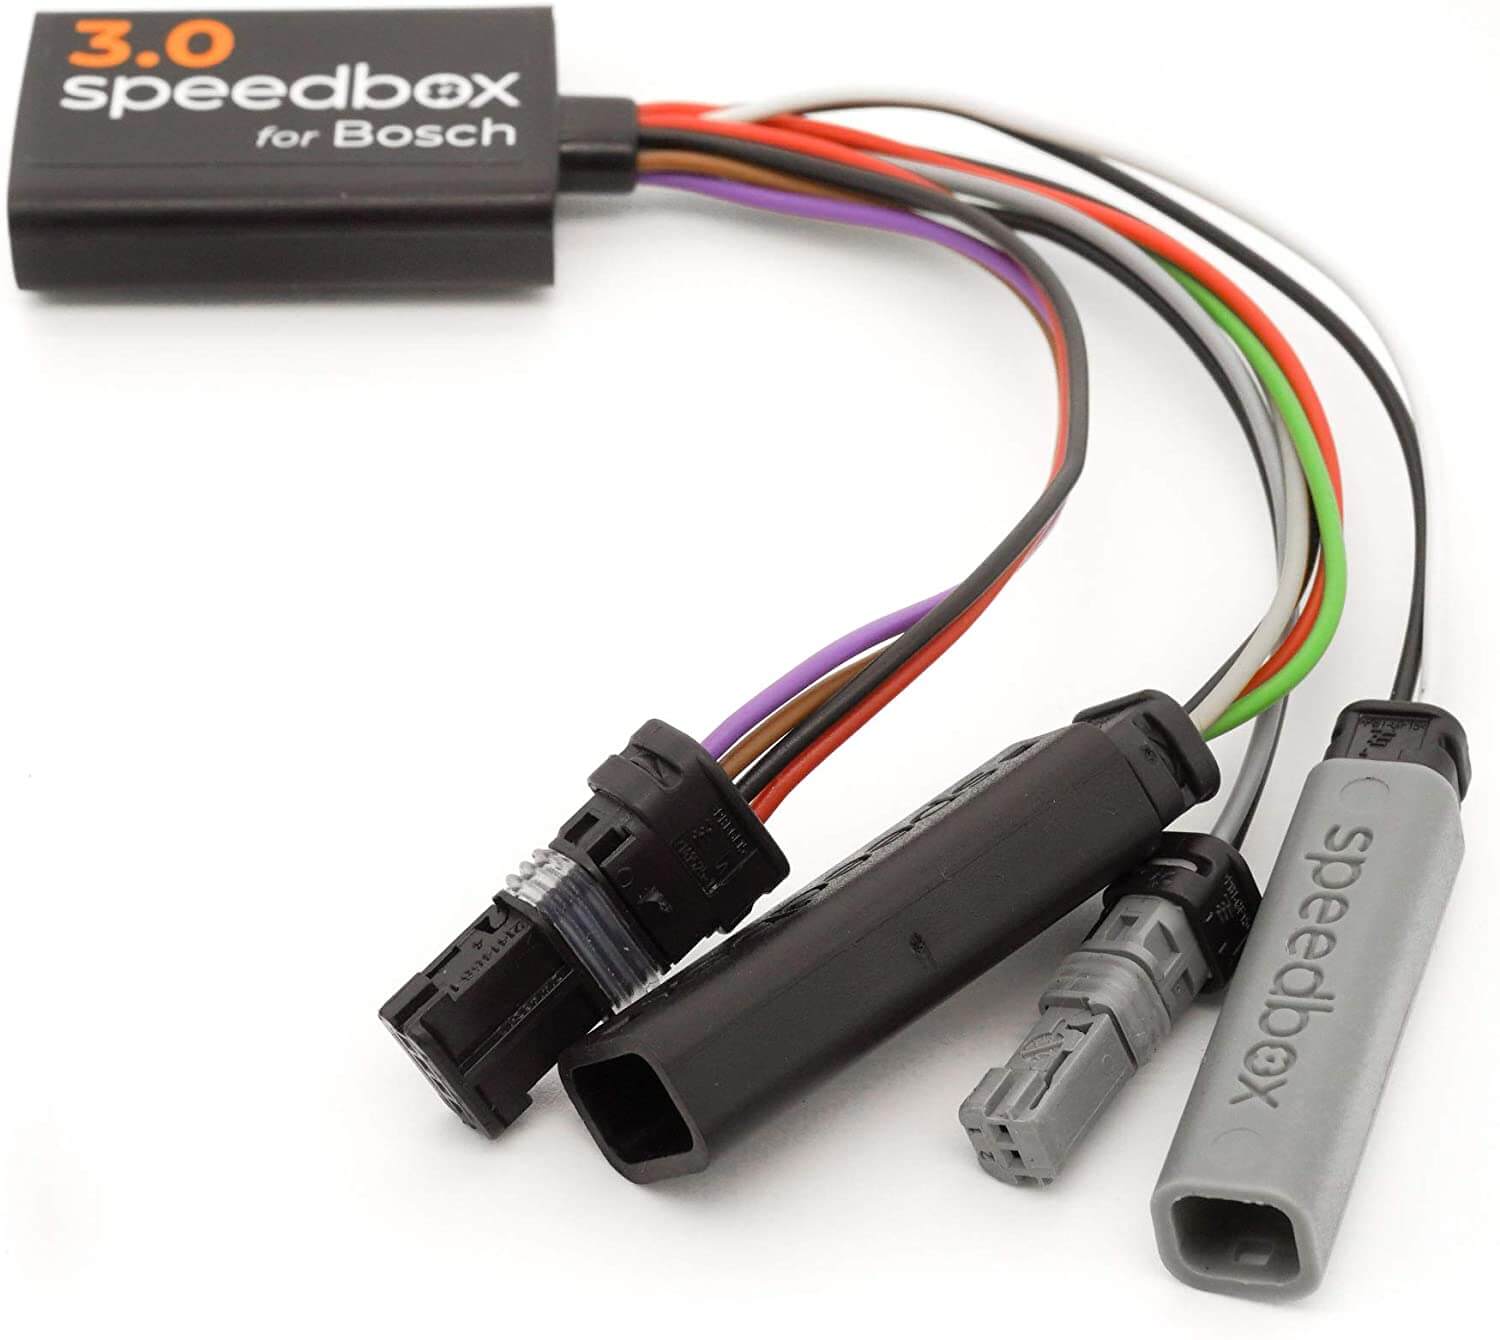 Speedbox 3.0 for Bosch - No Smart System + Crank Puller